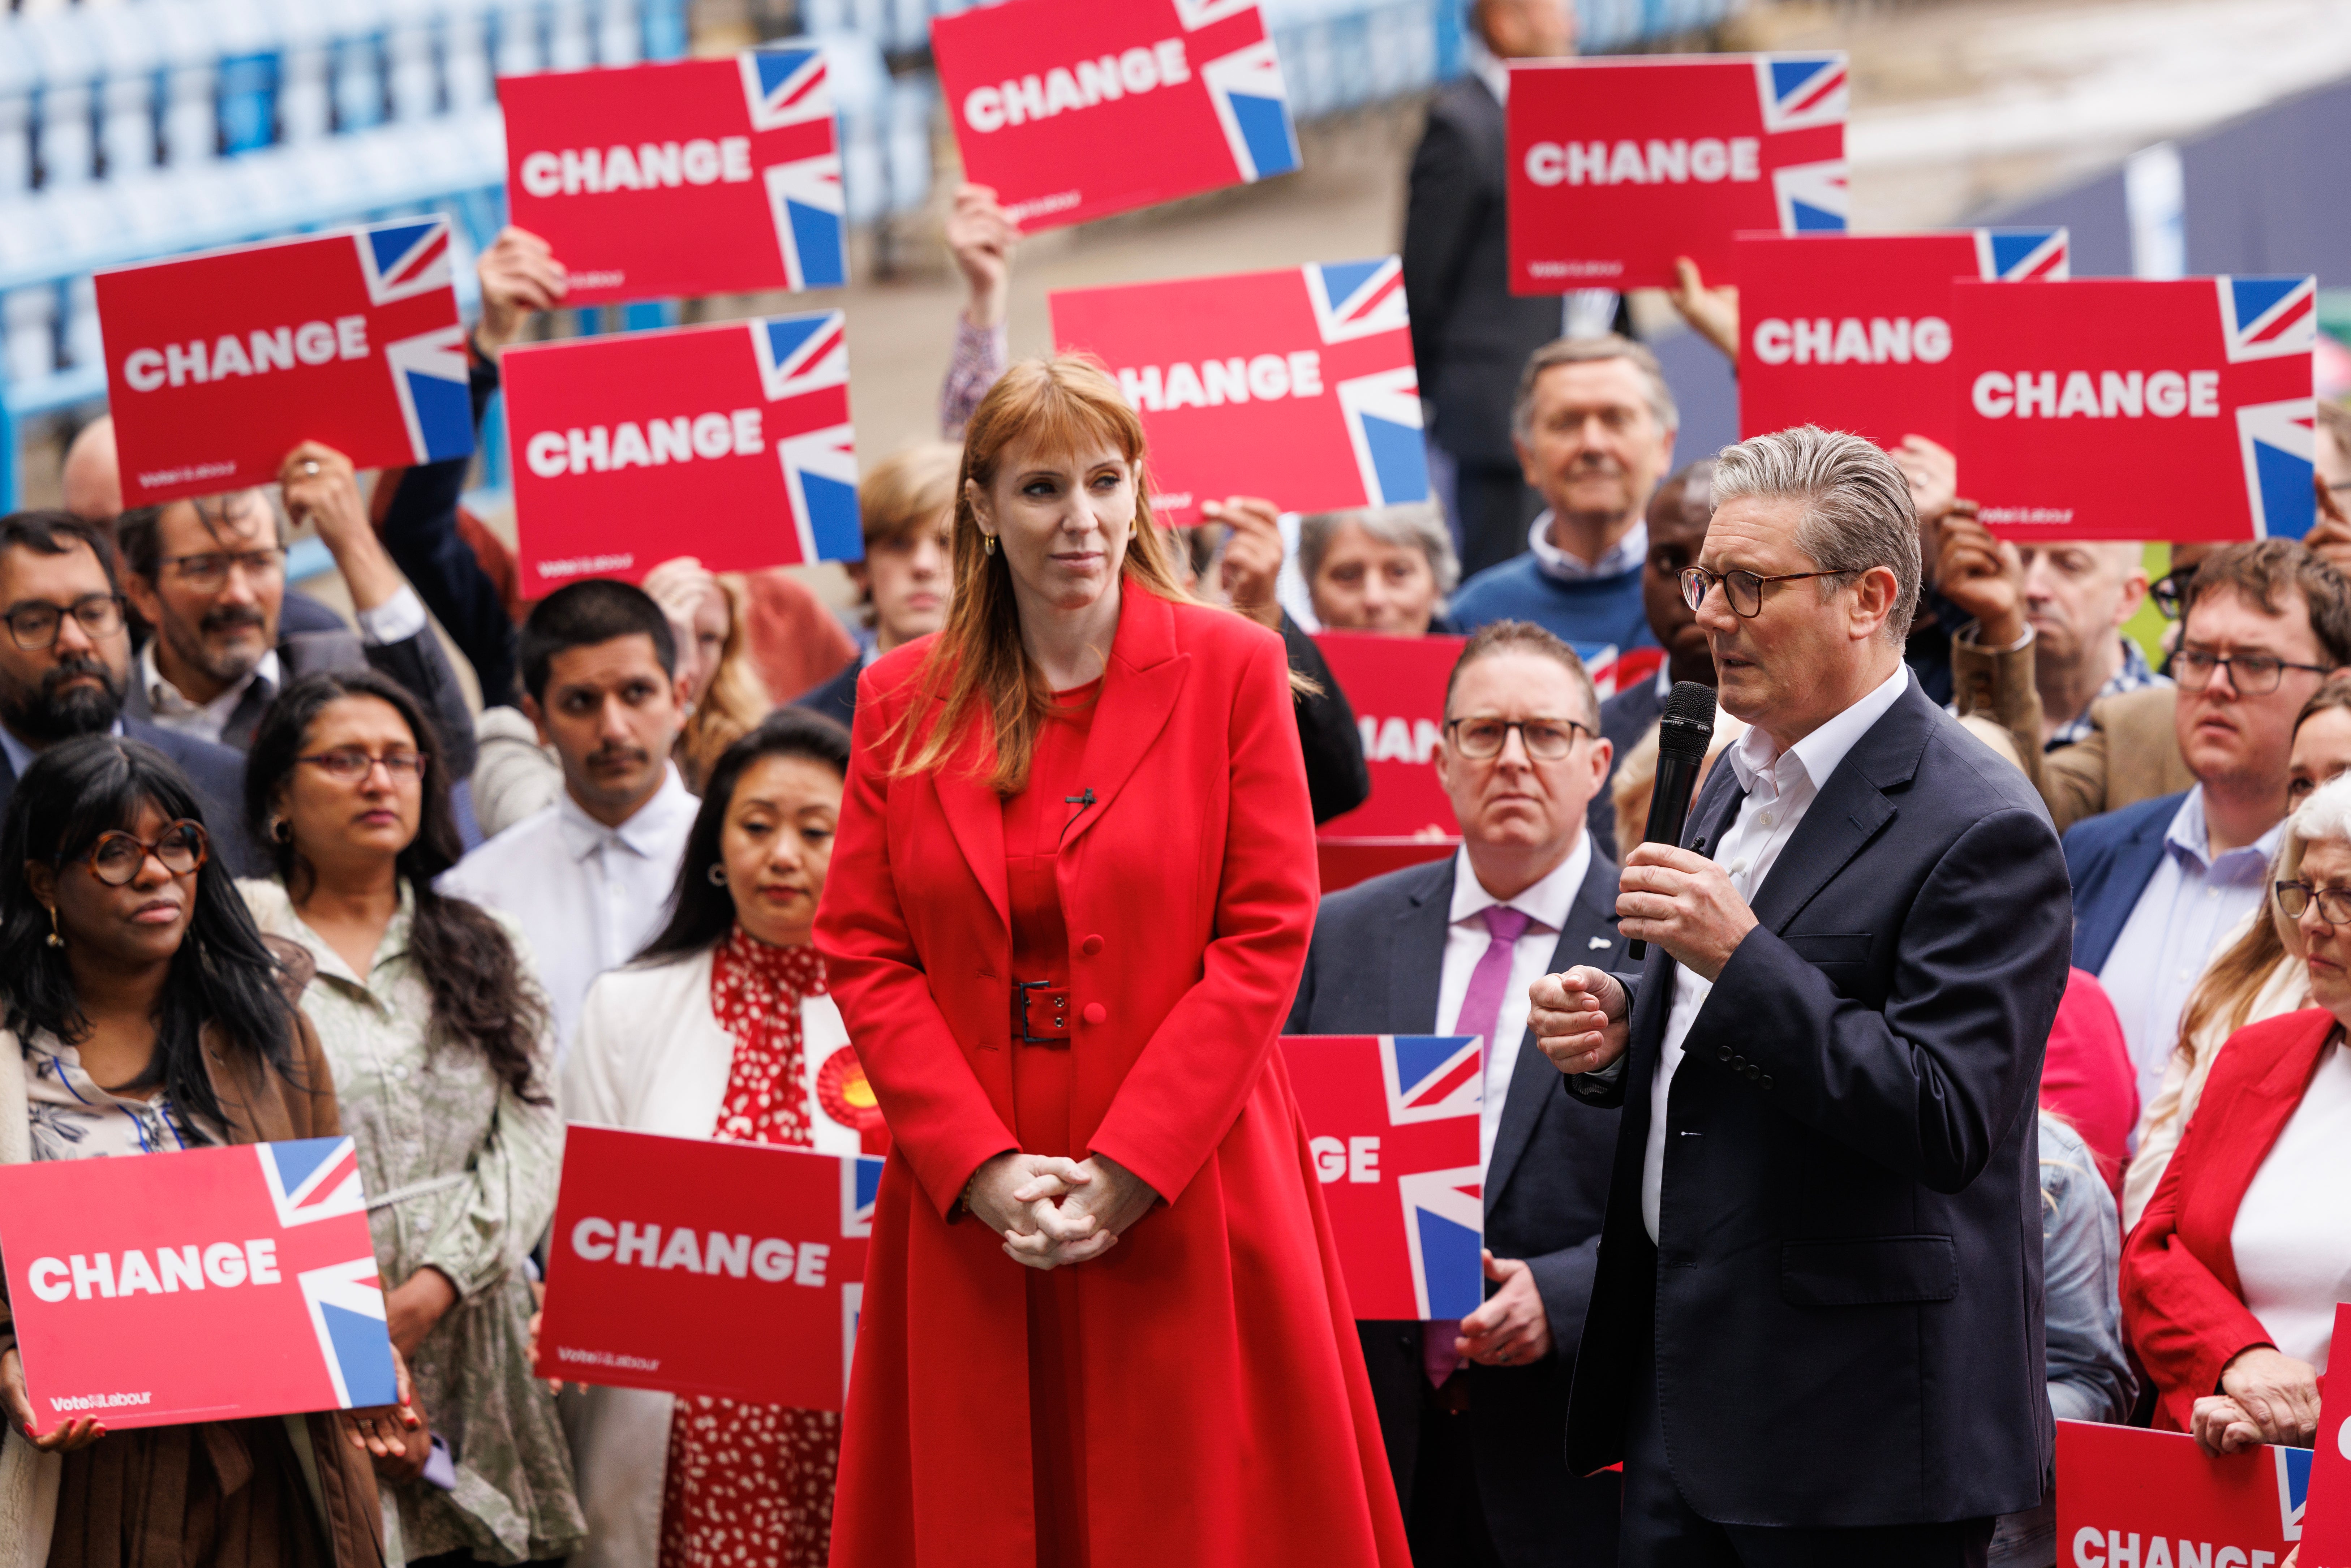 Sir Keir Starmer kicked off Labour’s campaign alongside Angela Rayner